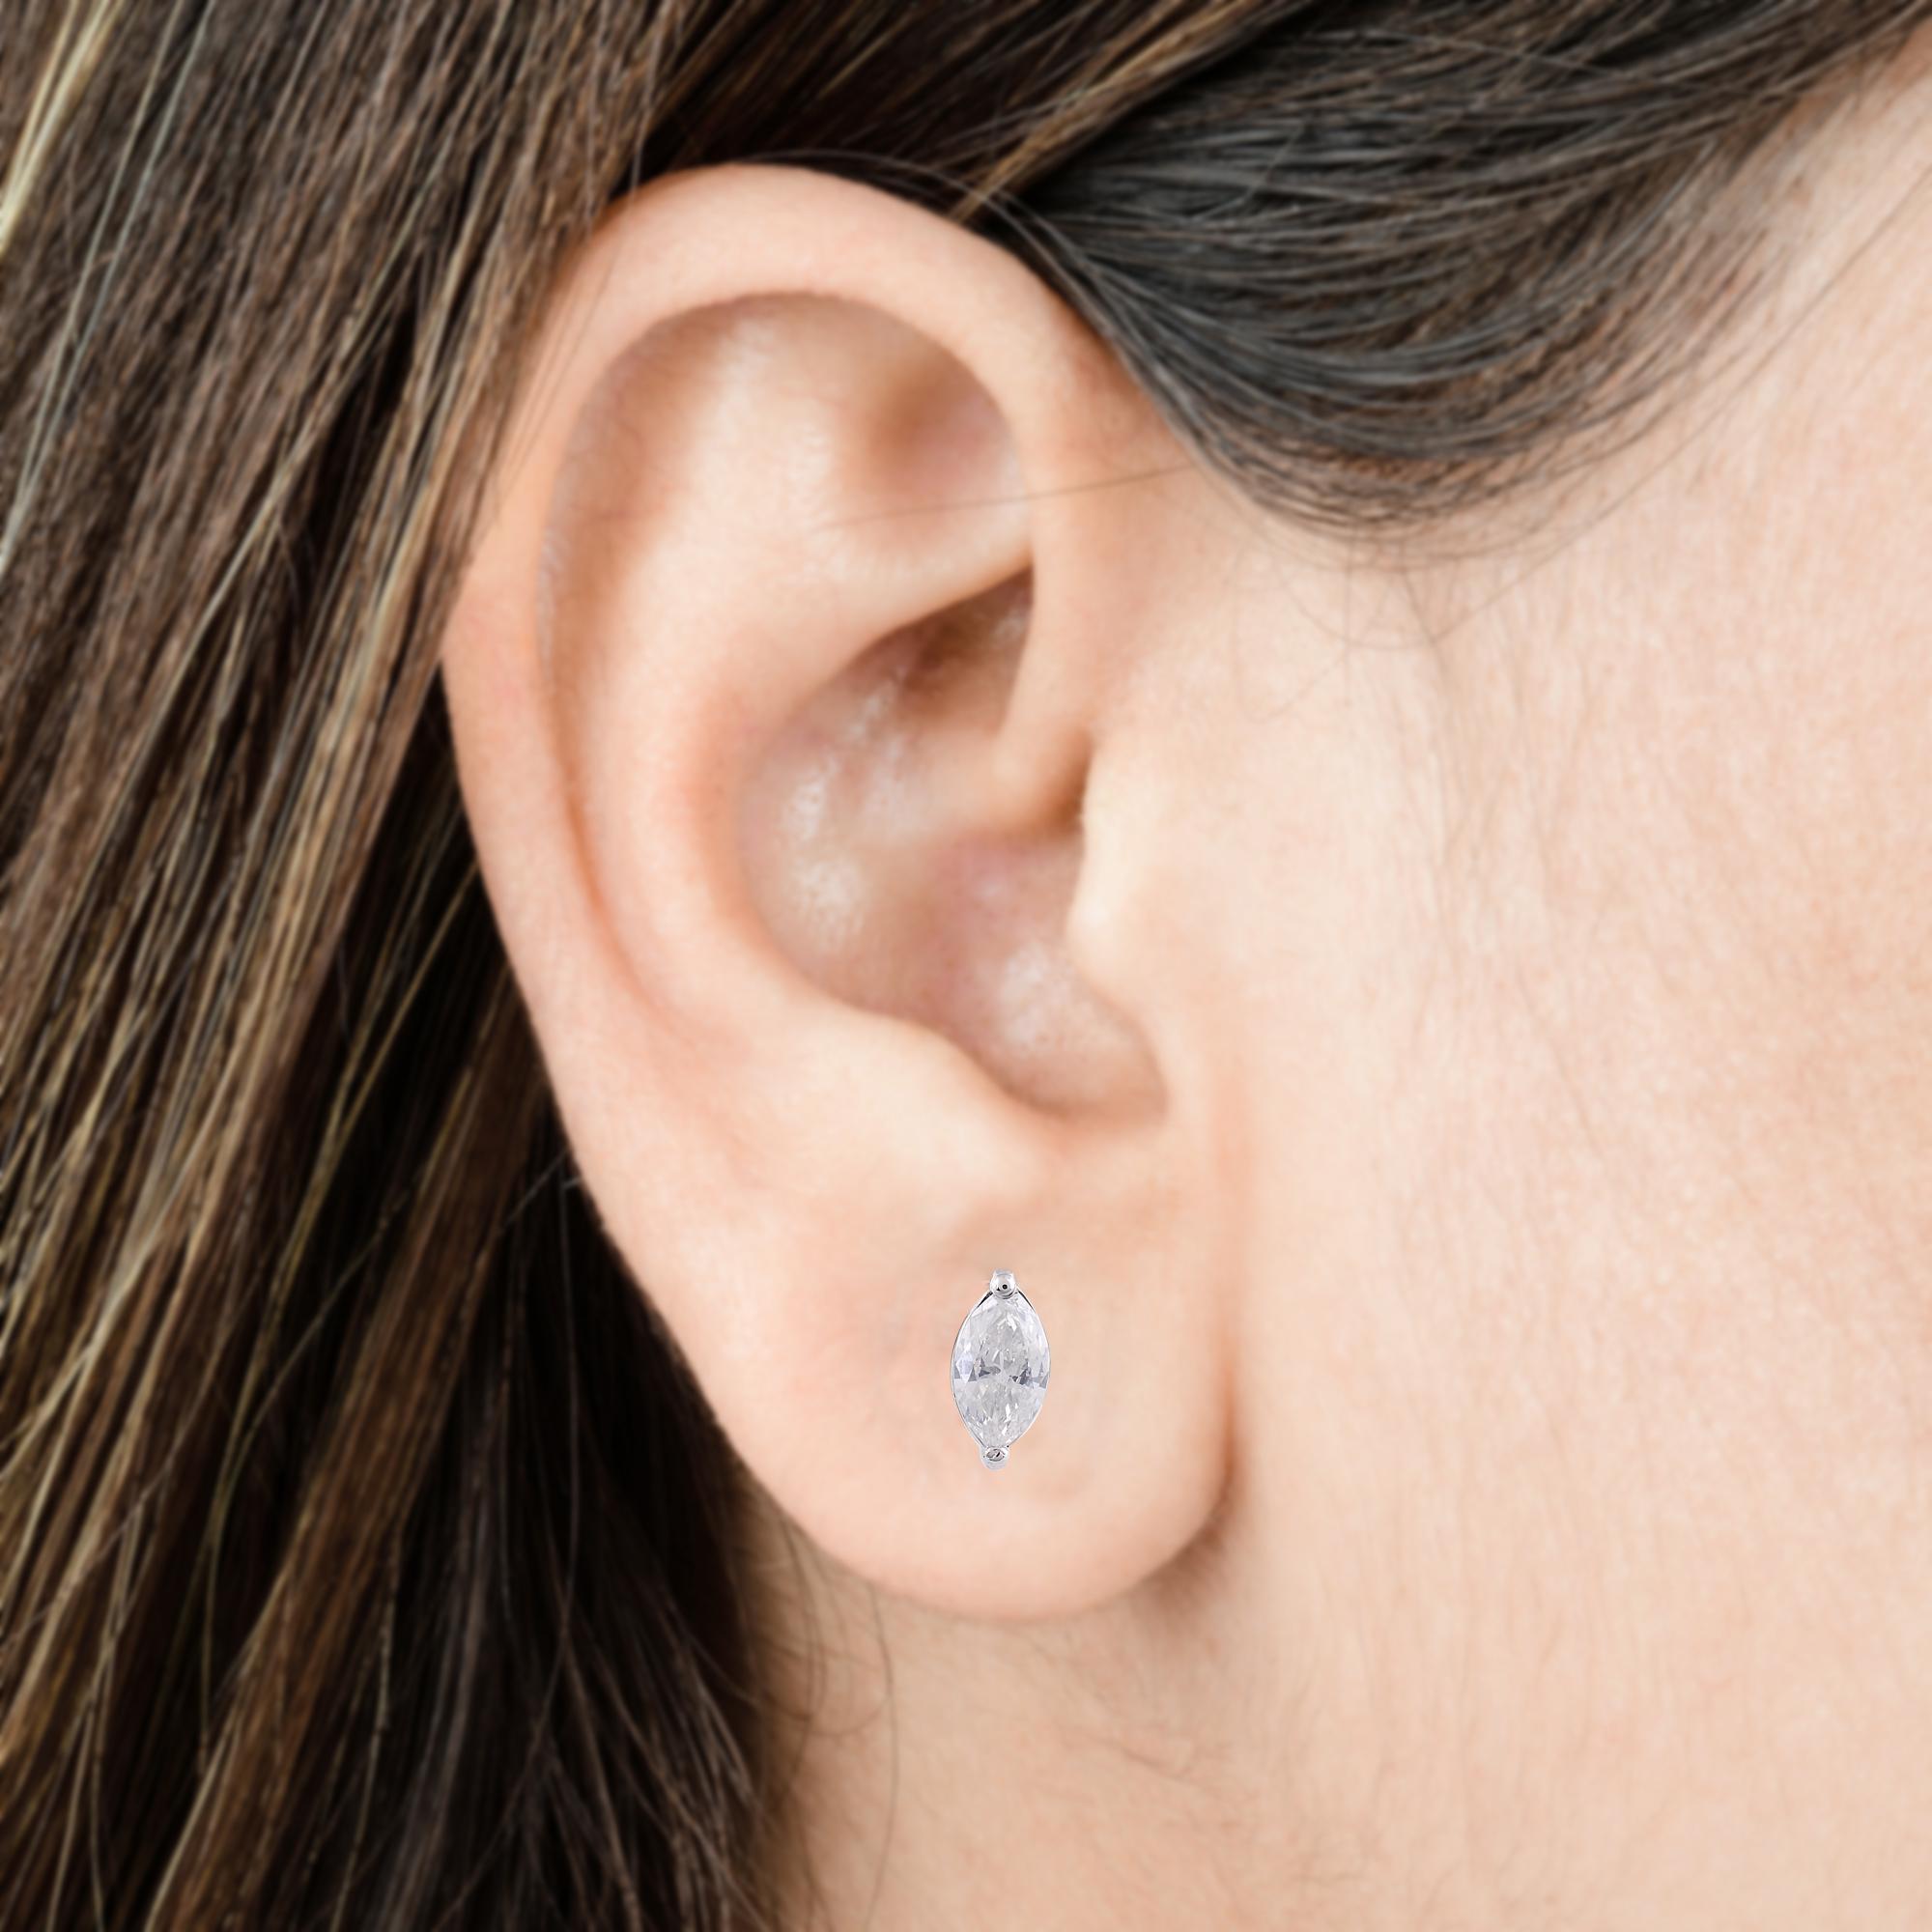 0.8 carat diamond earrings